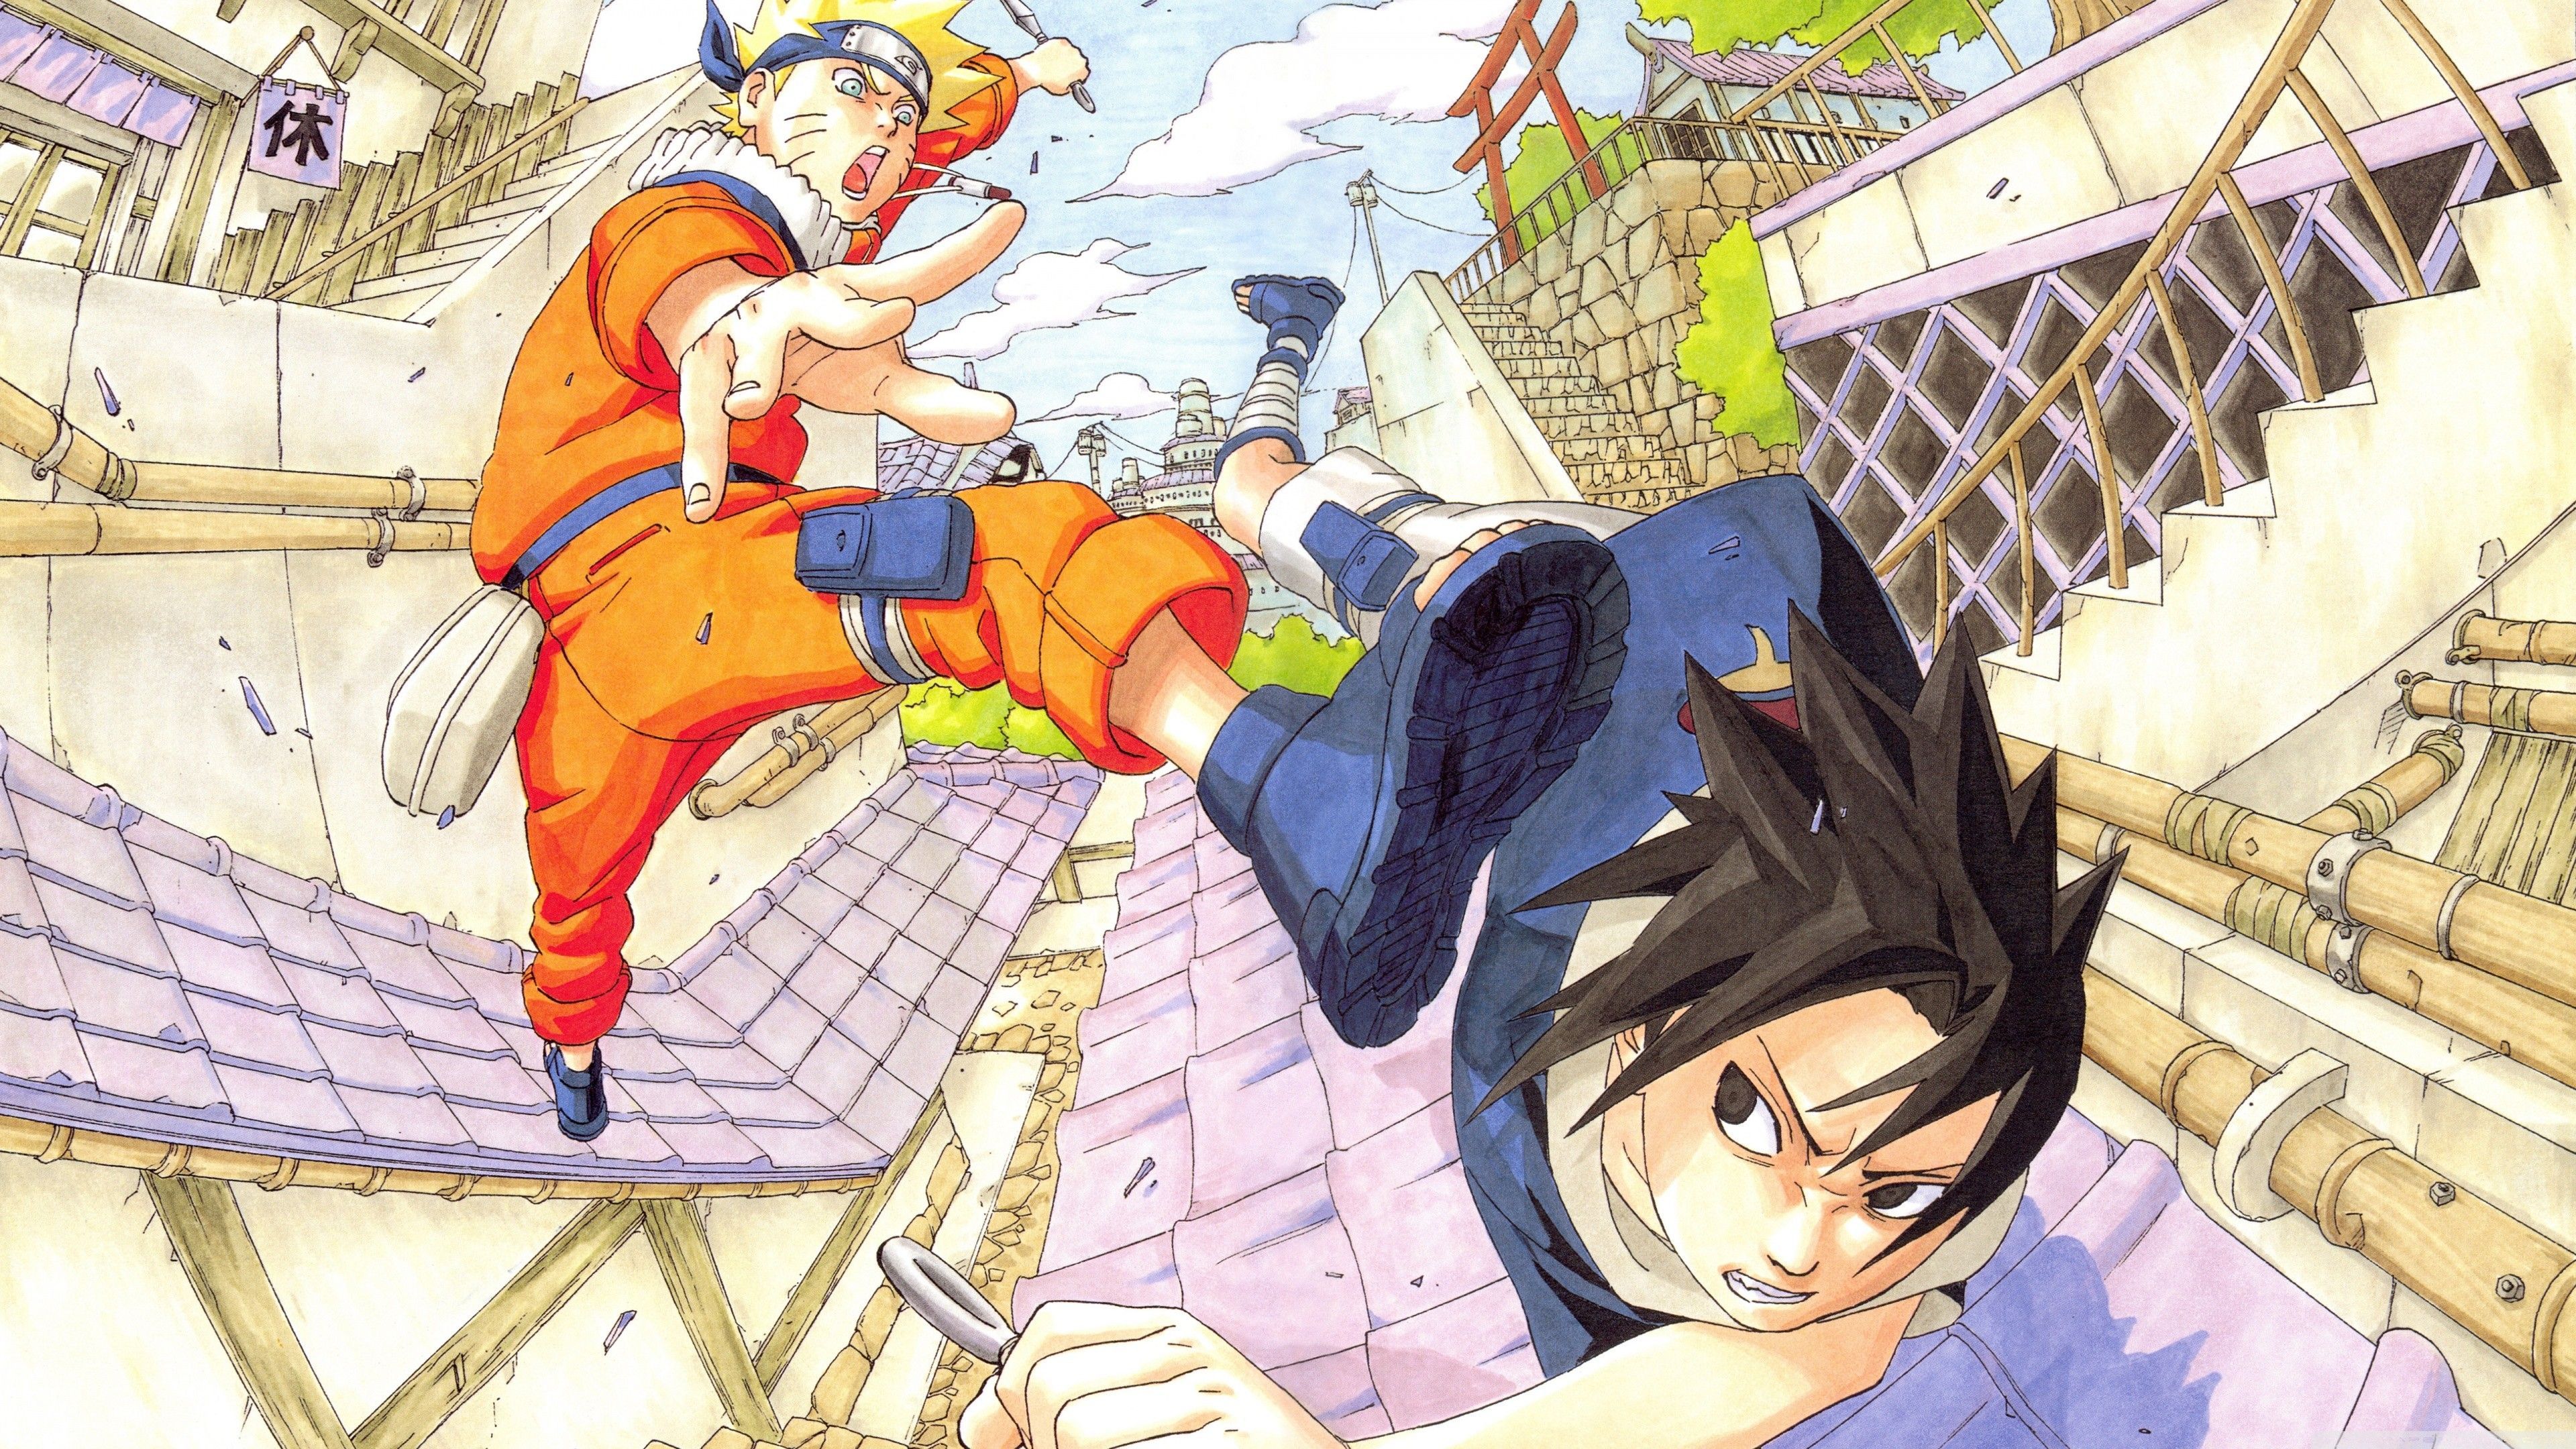 Naruto Manga Wallpaper Free .wallpaperaccess.com